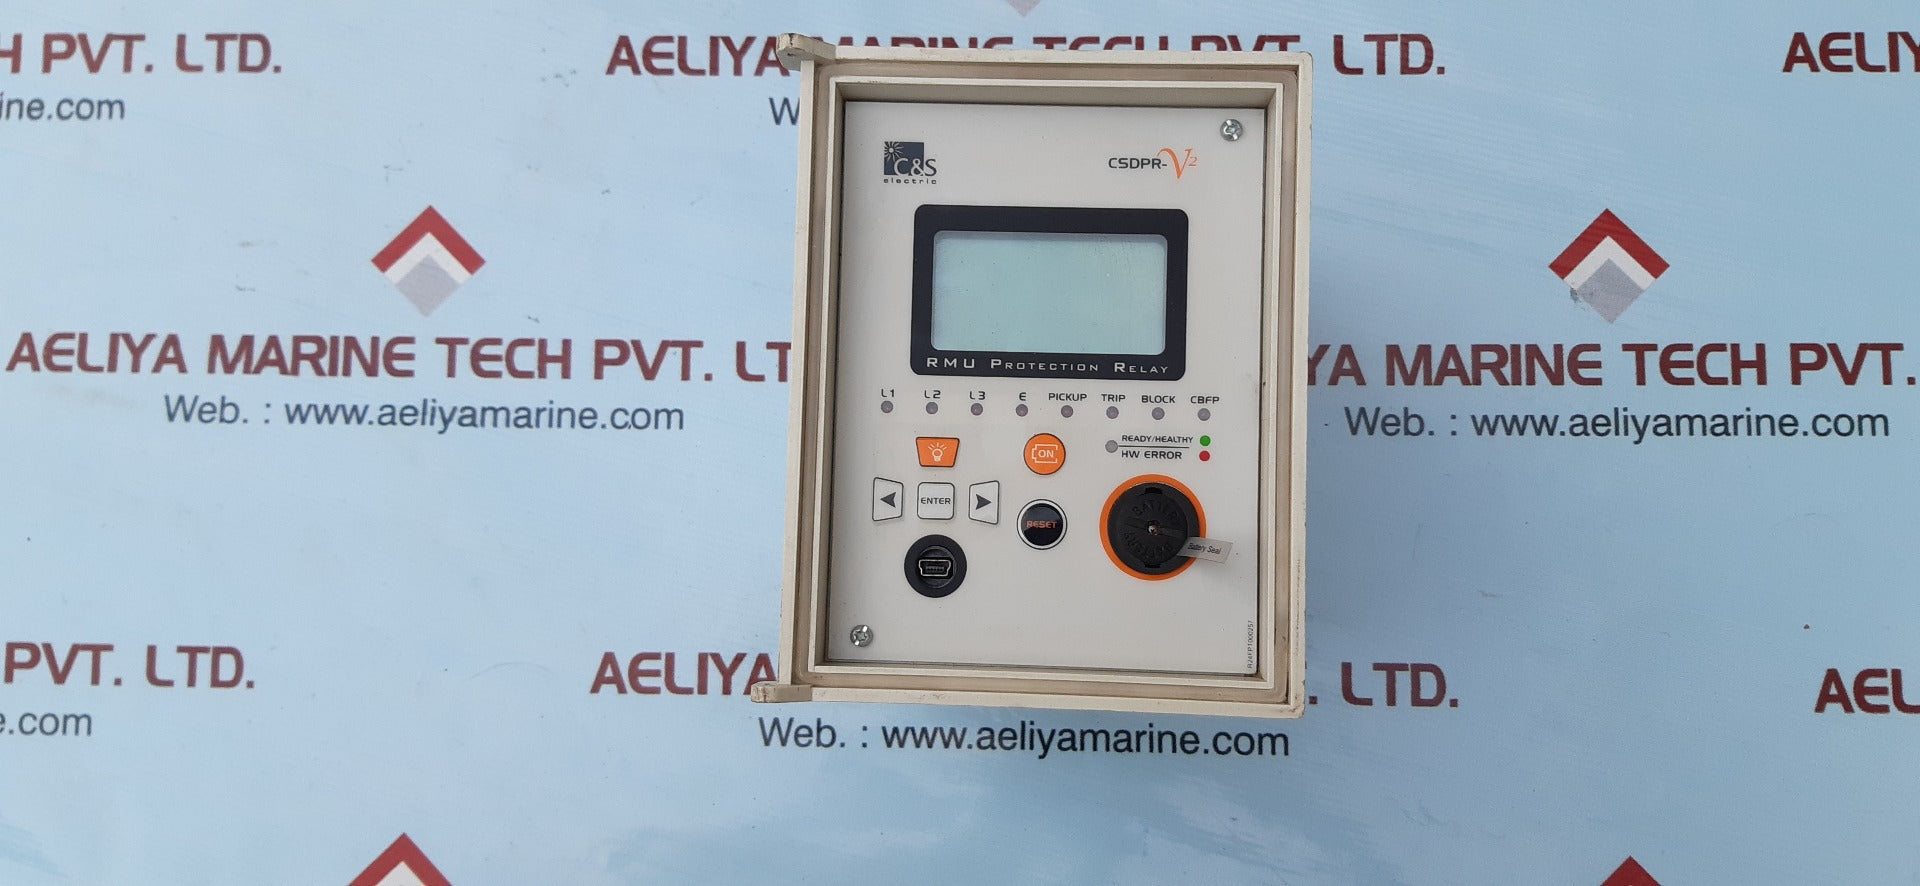 C&s electric csdpr-v2-200-d-h-n rmu protection relay